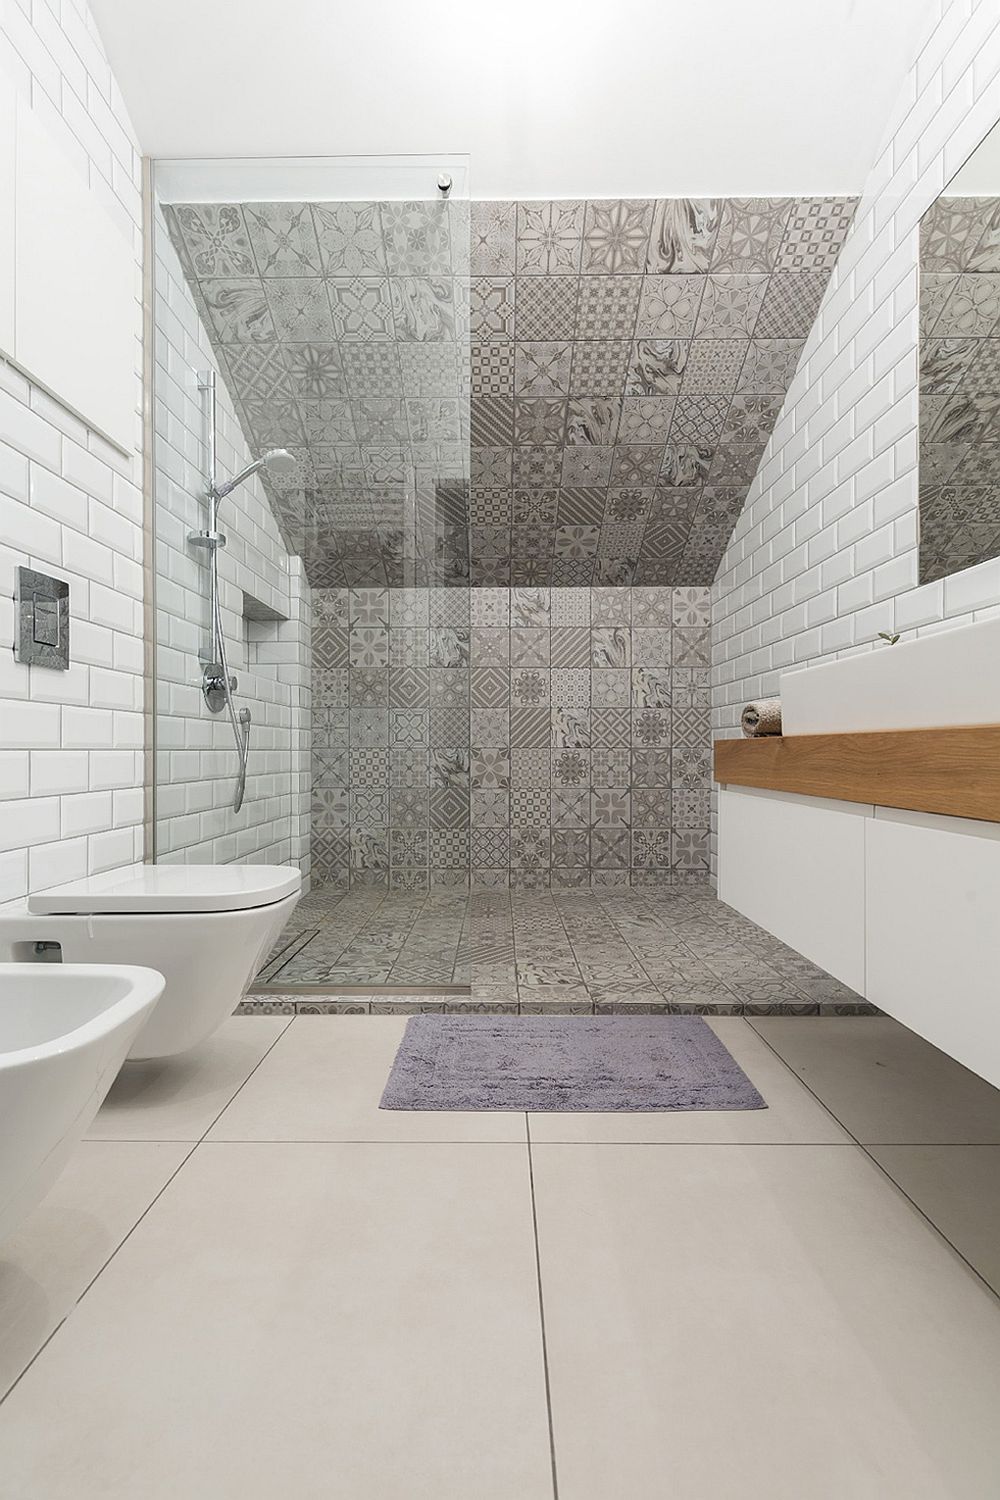 Tiles define the shower area of the modern bathroom